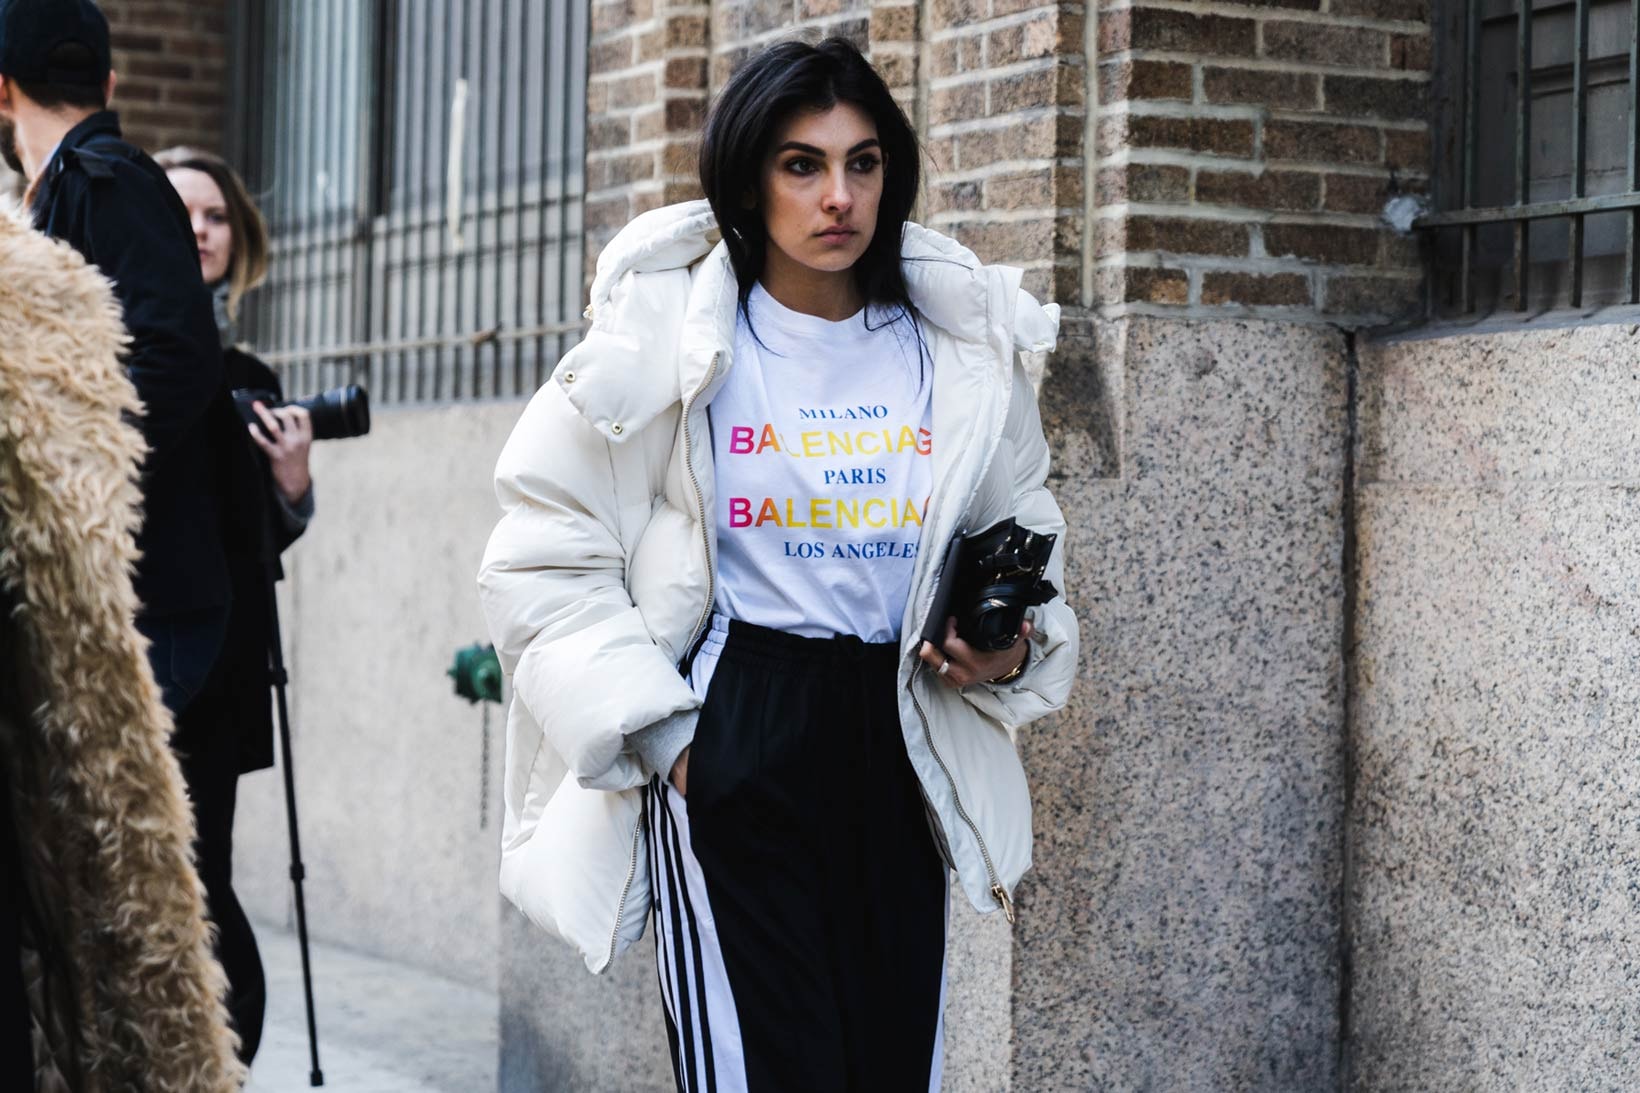 Balenciaga T-Shirt Woman New York Fashion Week 2018 Streetsnaps